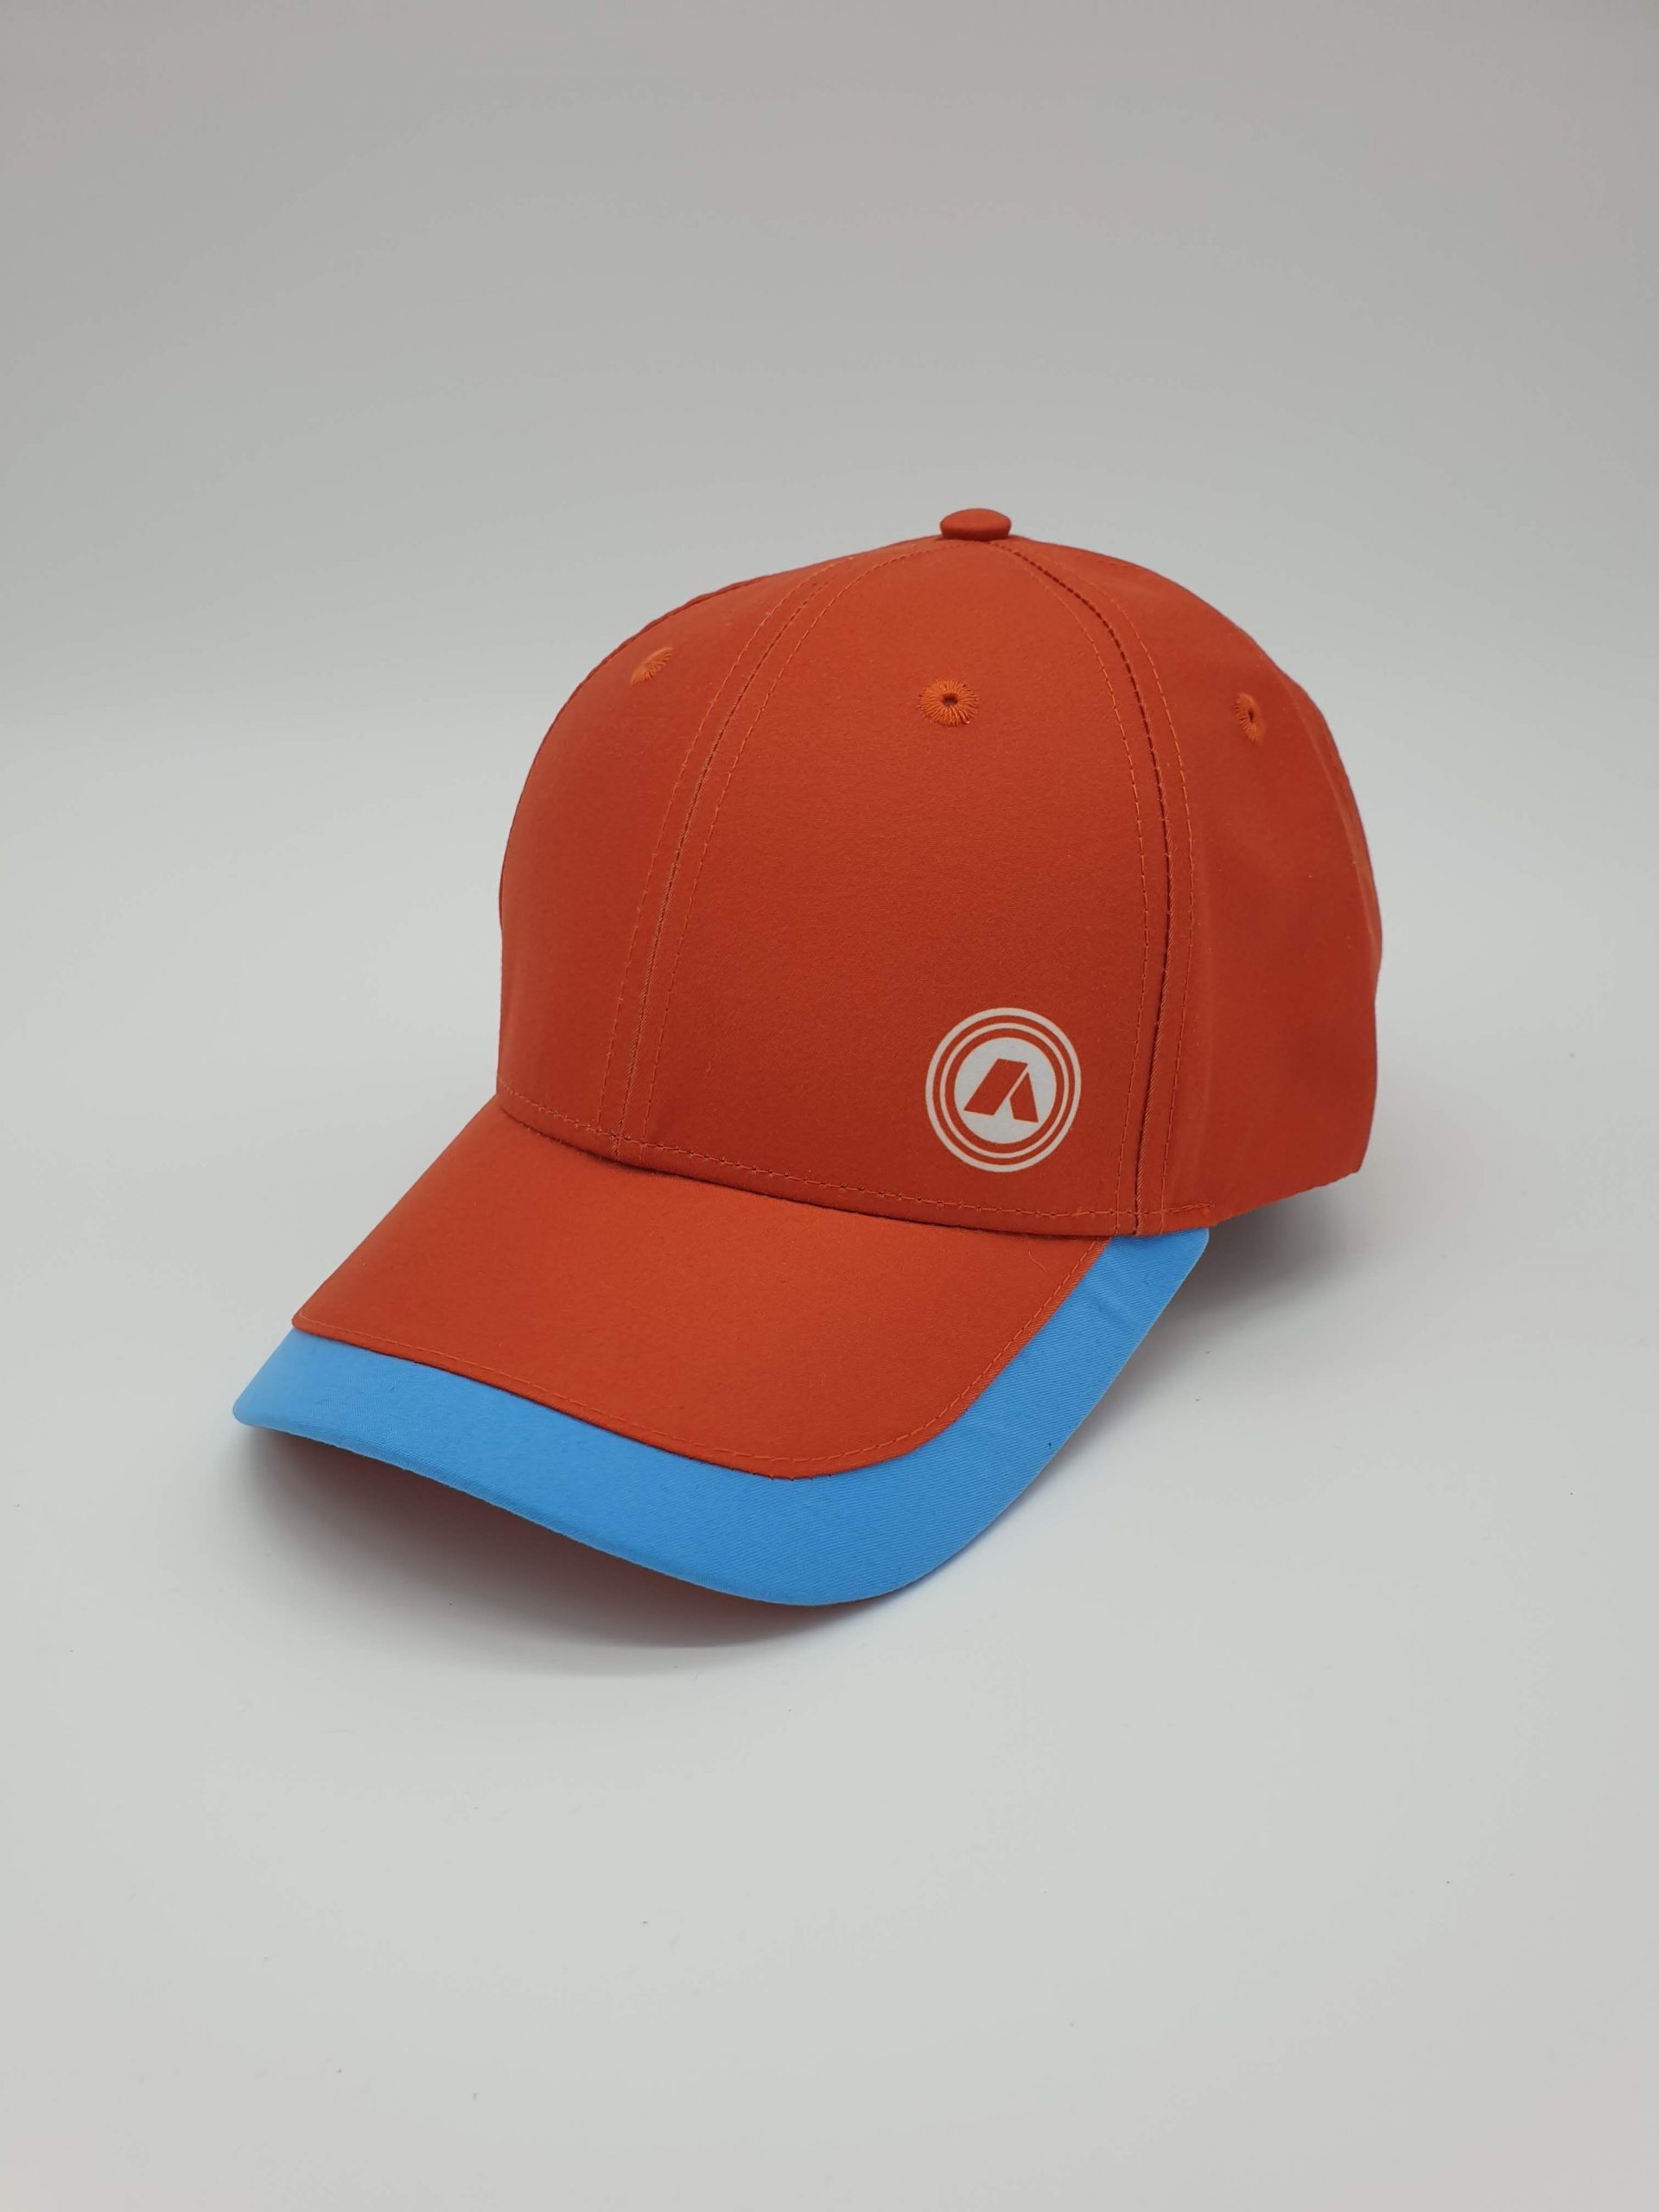 Arduua Mountaineering Baseball Cap, red/blue - Arduua